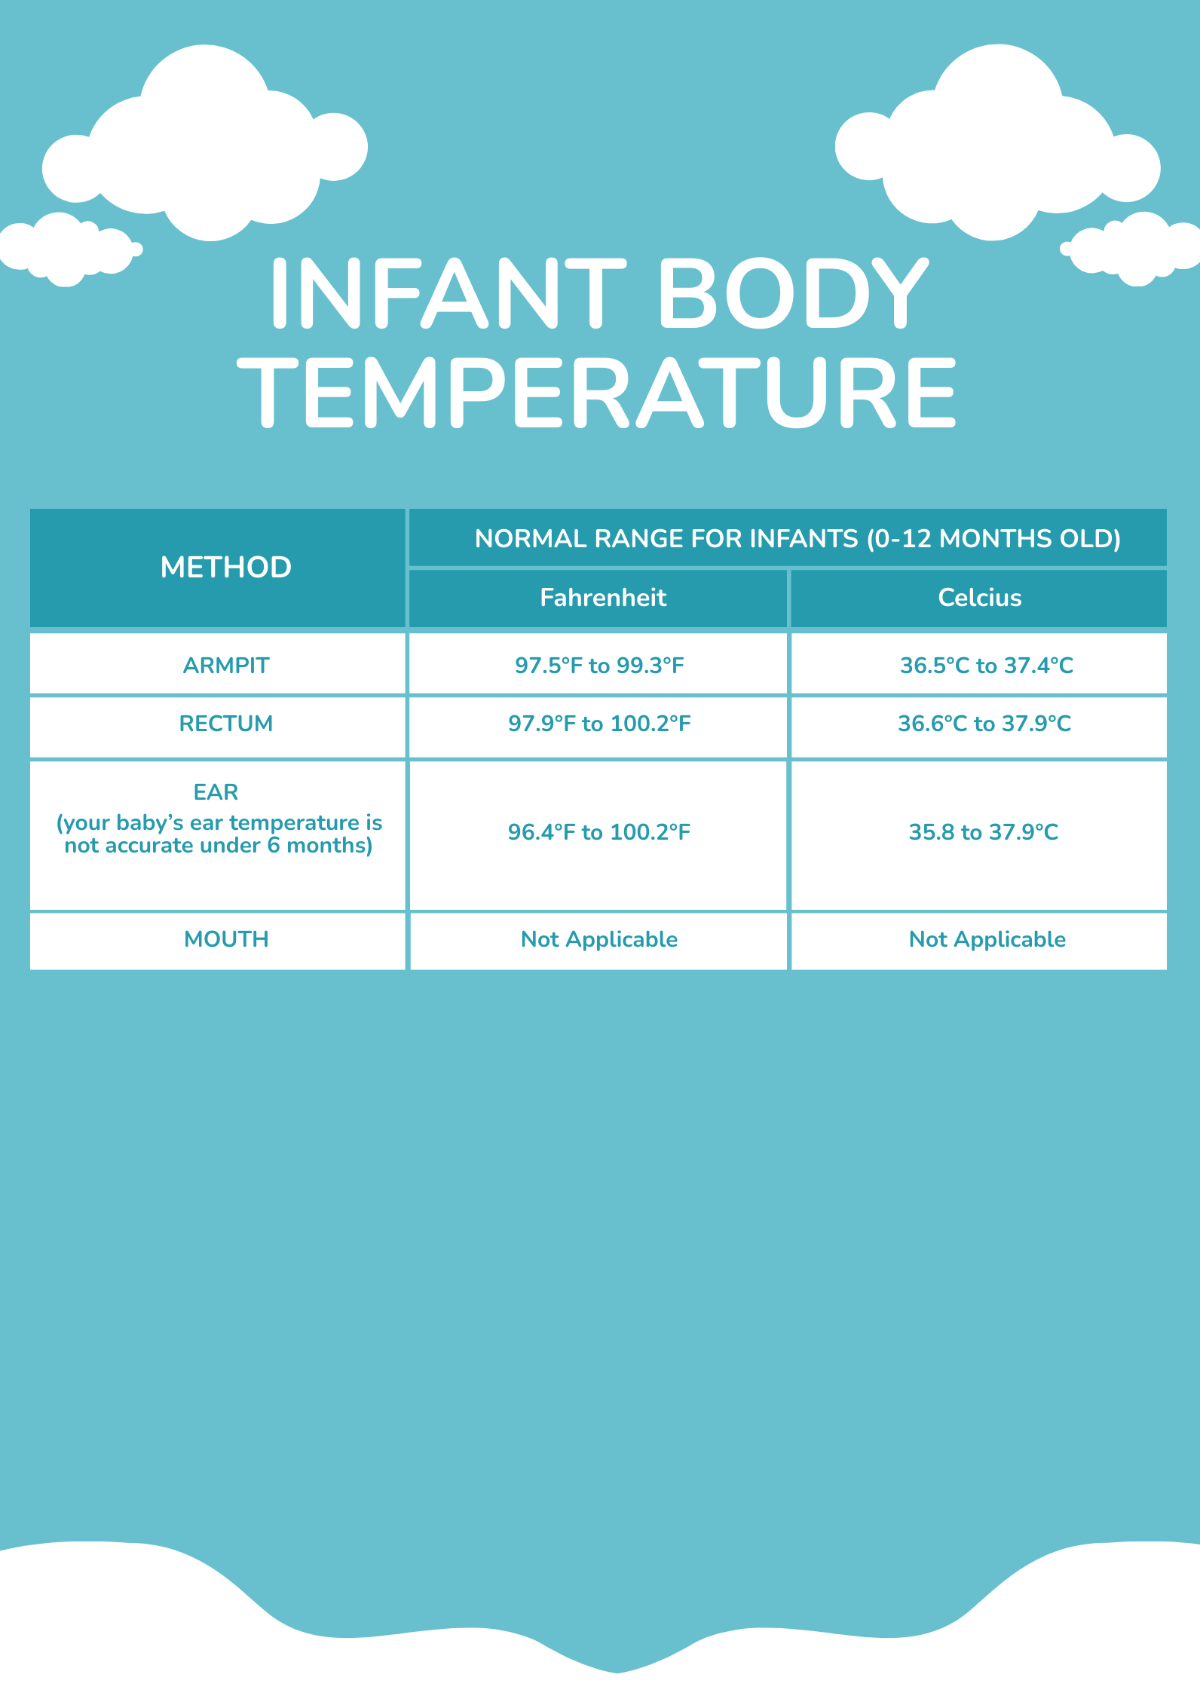 https://images.template.net/213847/infant-body-temperature-chart-edit-online-1.jpg